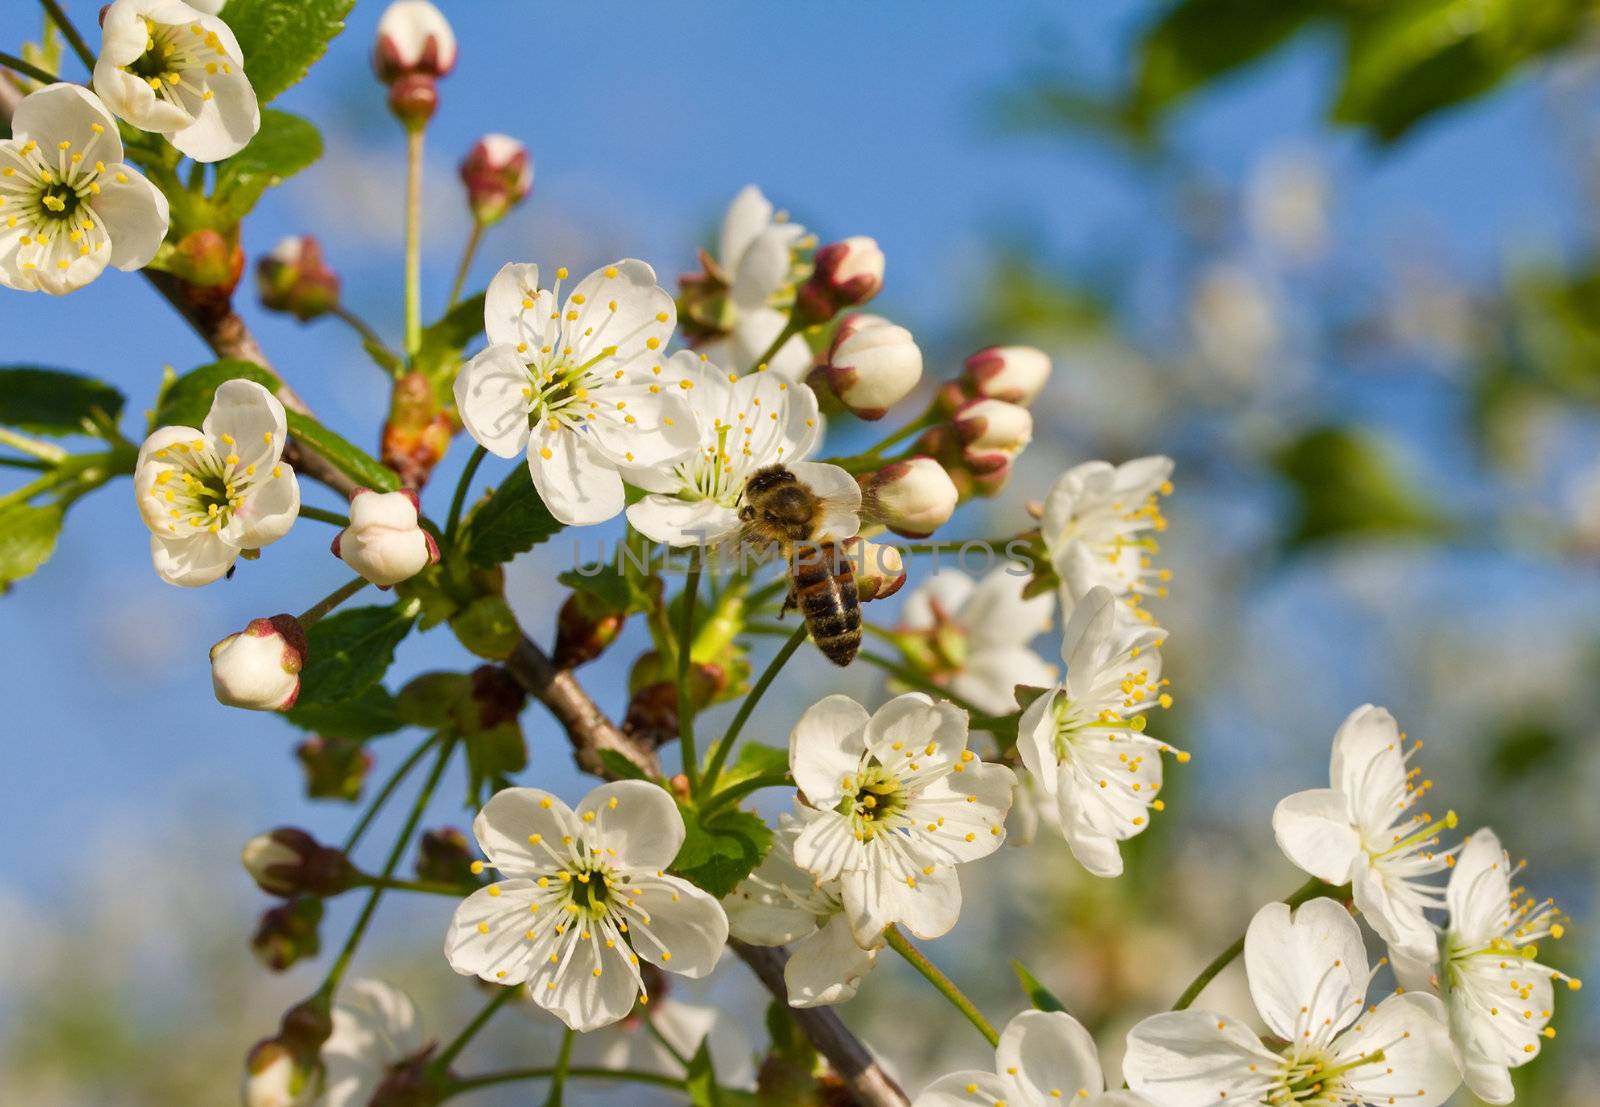 honeybee pollinating flowers of cherry by Alekcey